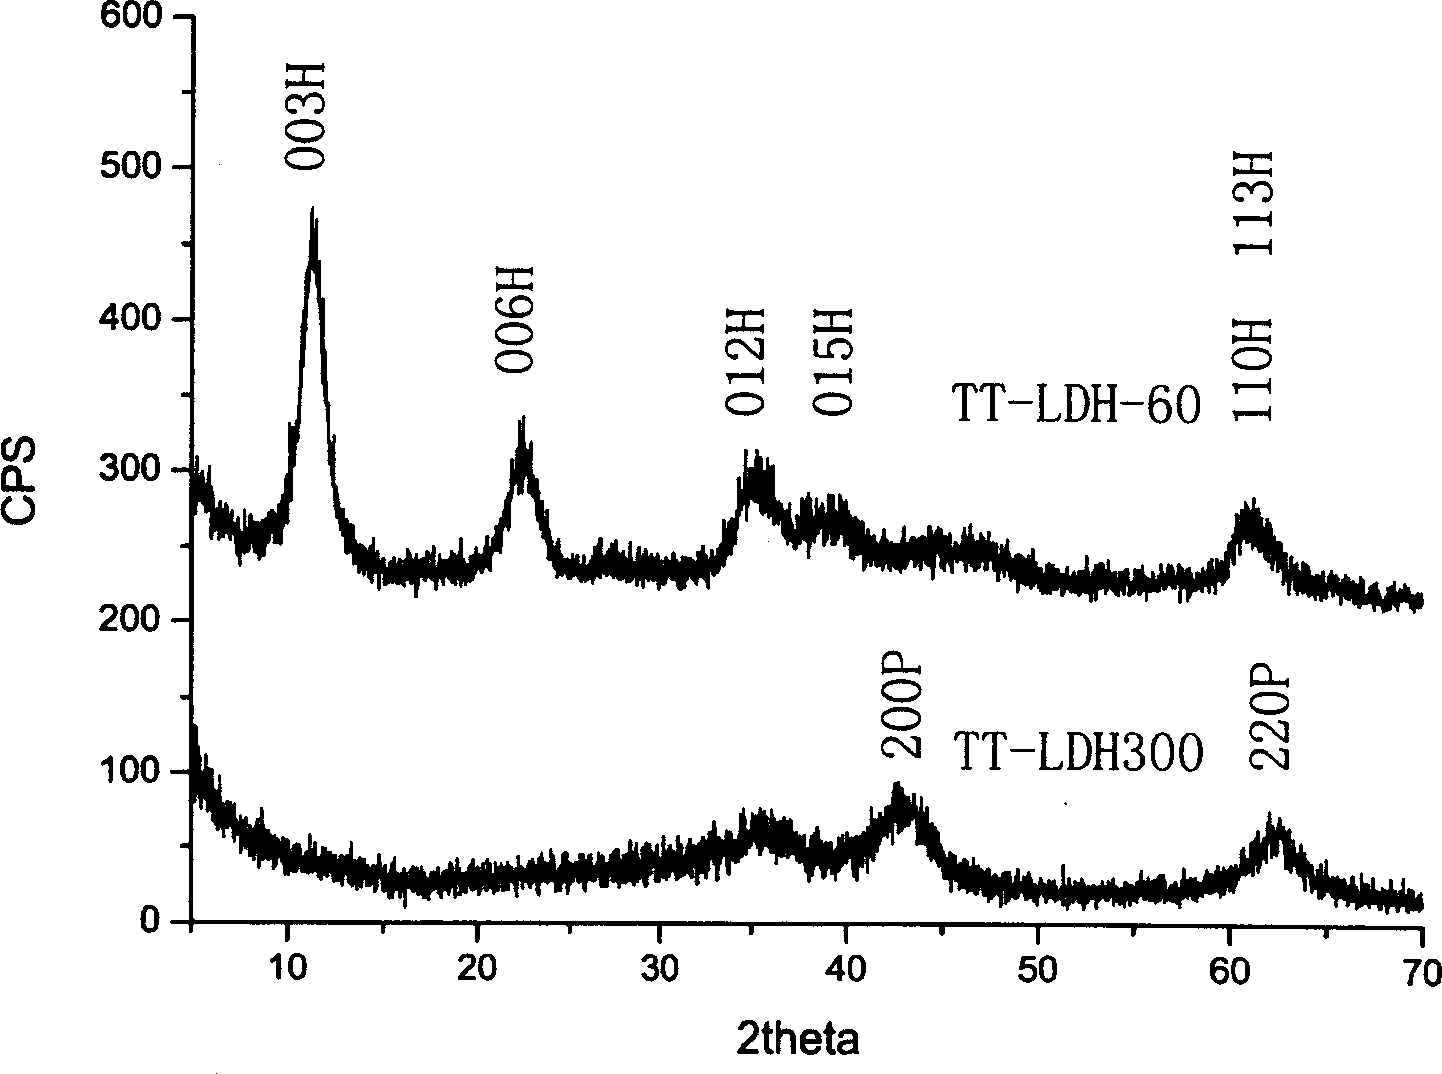 Prepn of laminated dihydrogen oxide and its derivative quasi-periclase